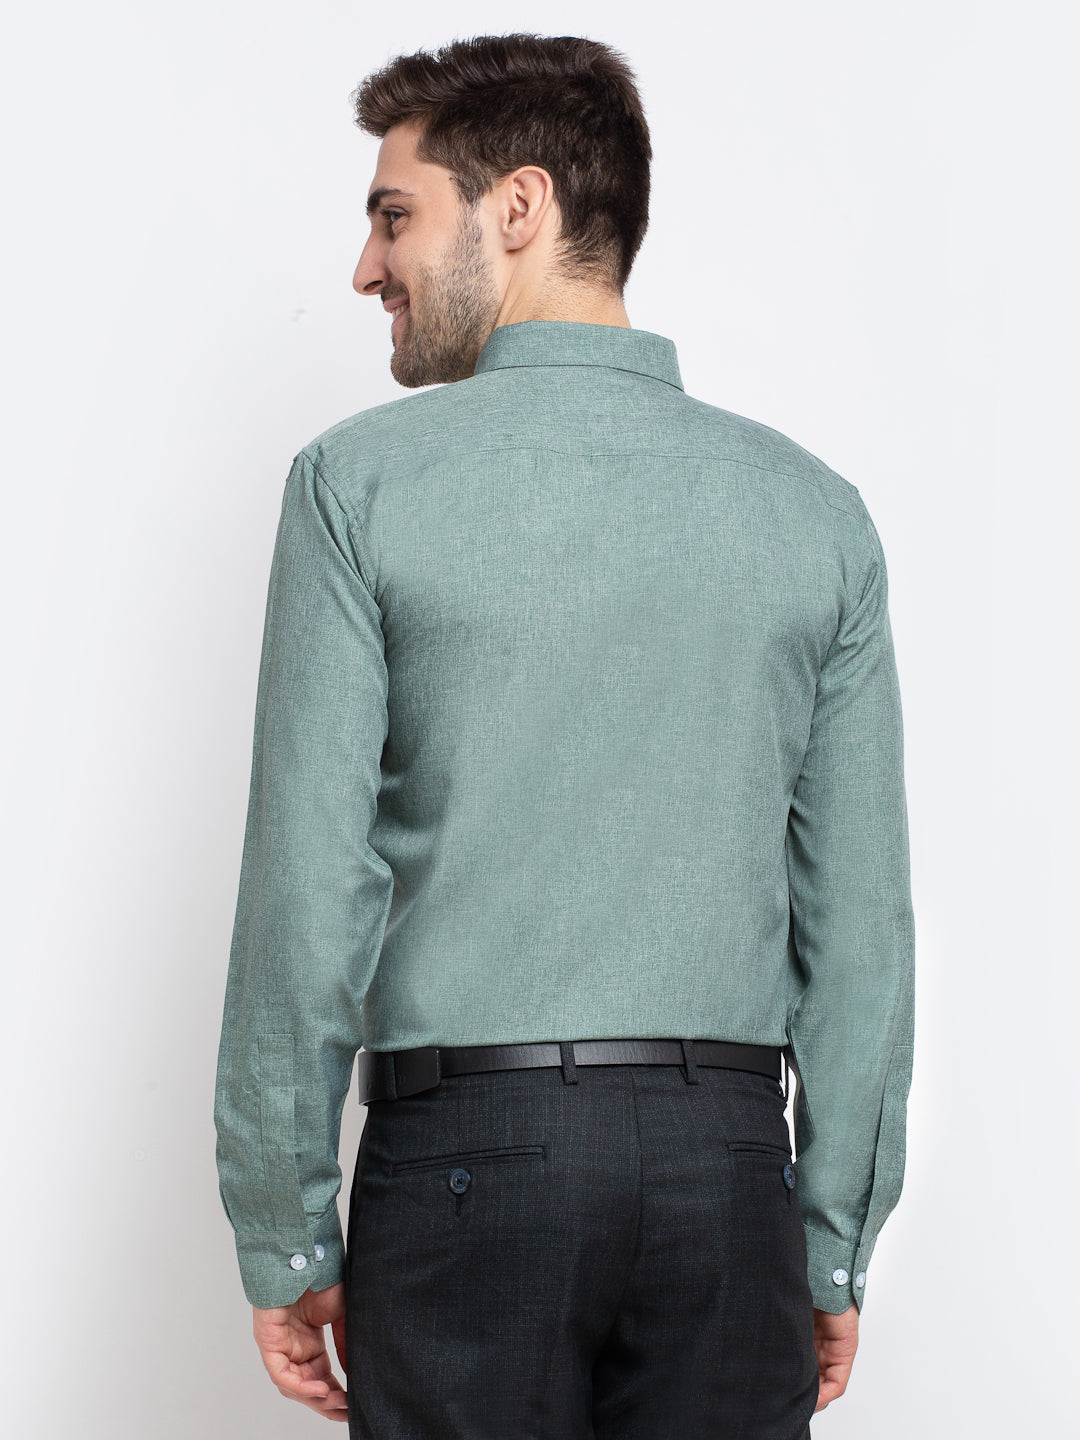 Men's Green Button Down Collar Cotton Formal Shirt ( SF 785Green ) - Jainish